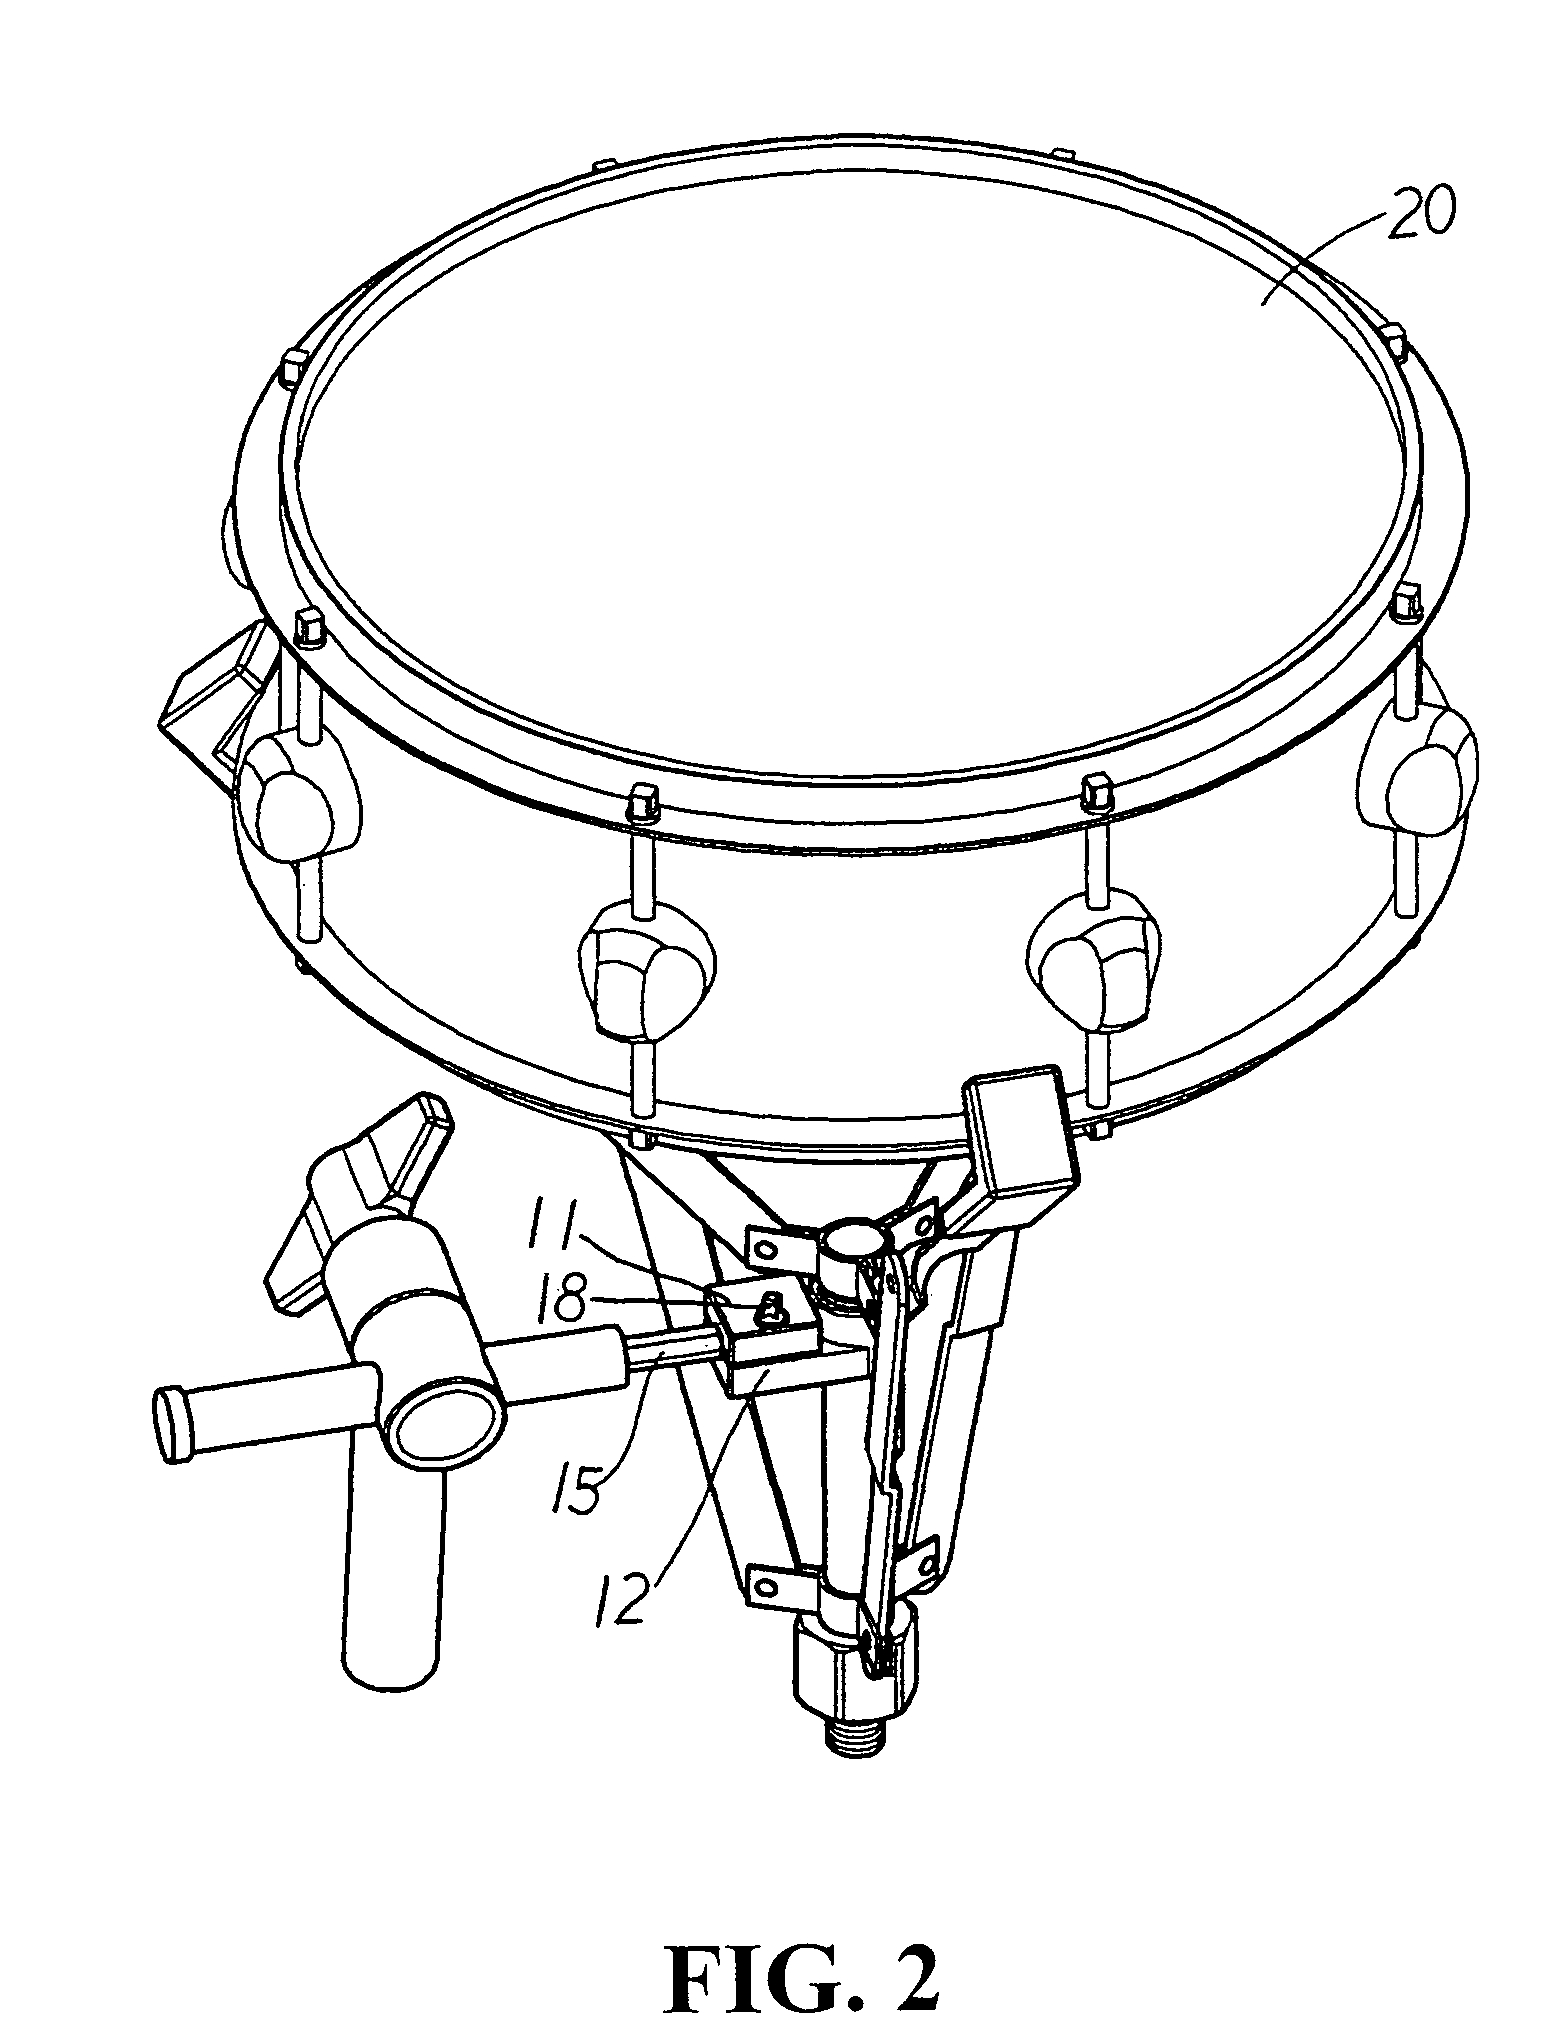 Snare drum stand lock adjustment